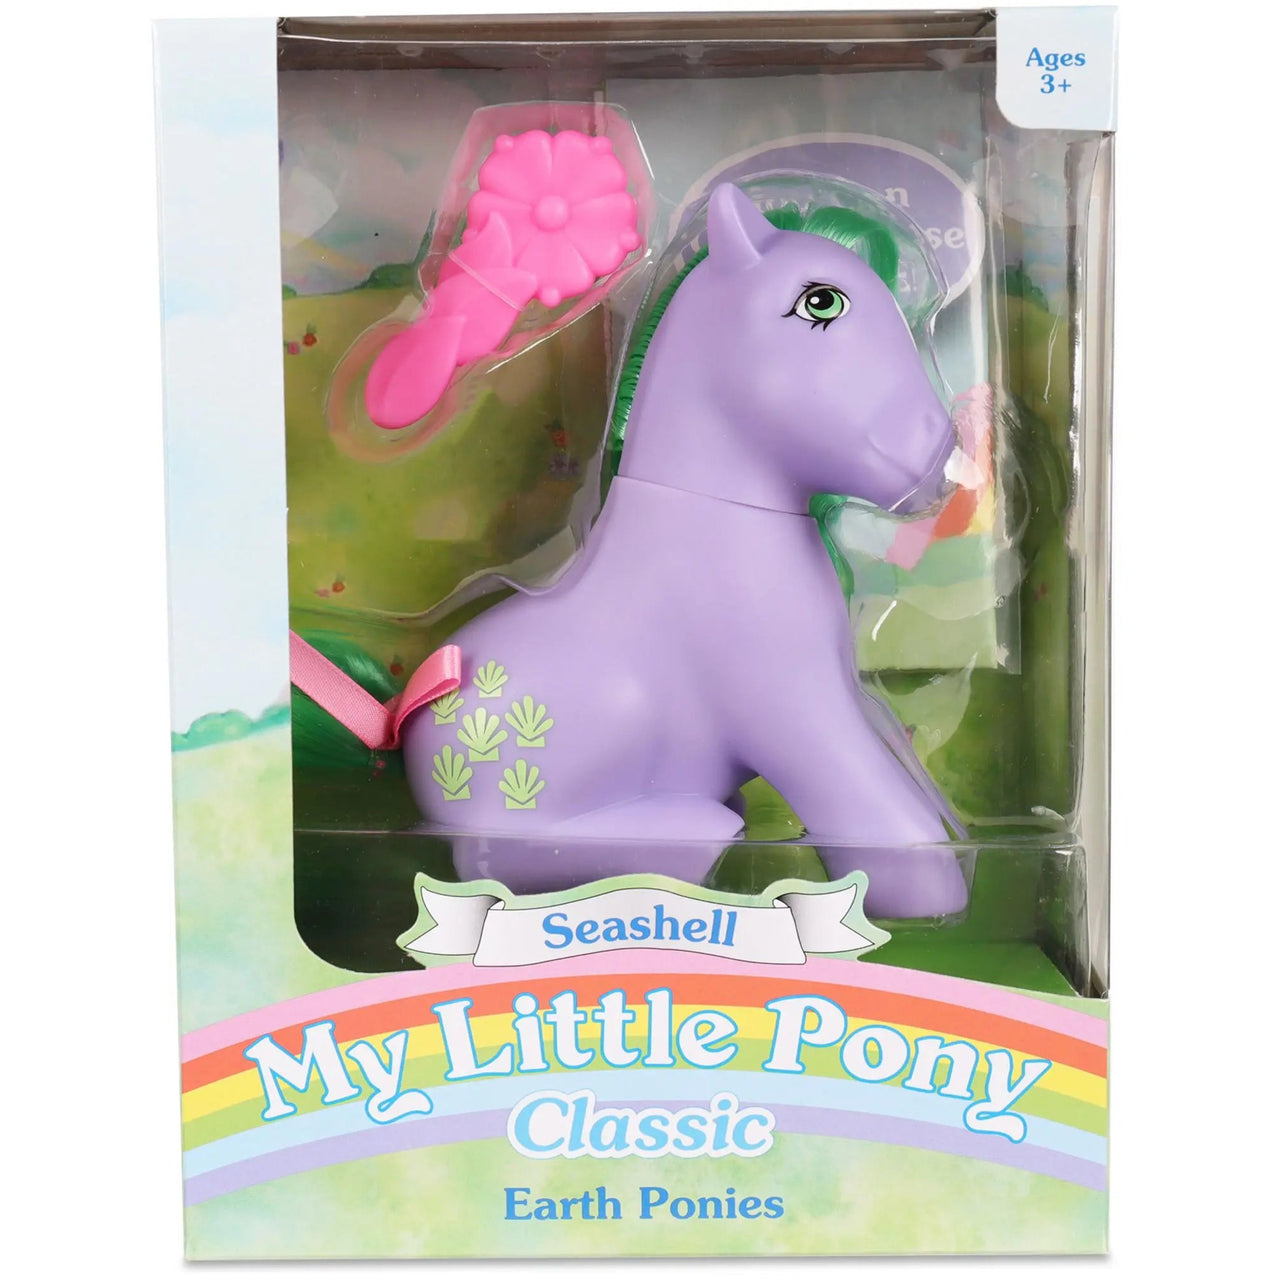 My Little Pony Classics Earth Ponies Seashell My Little Pony